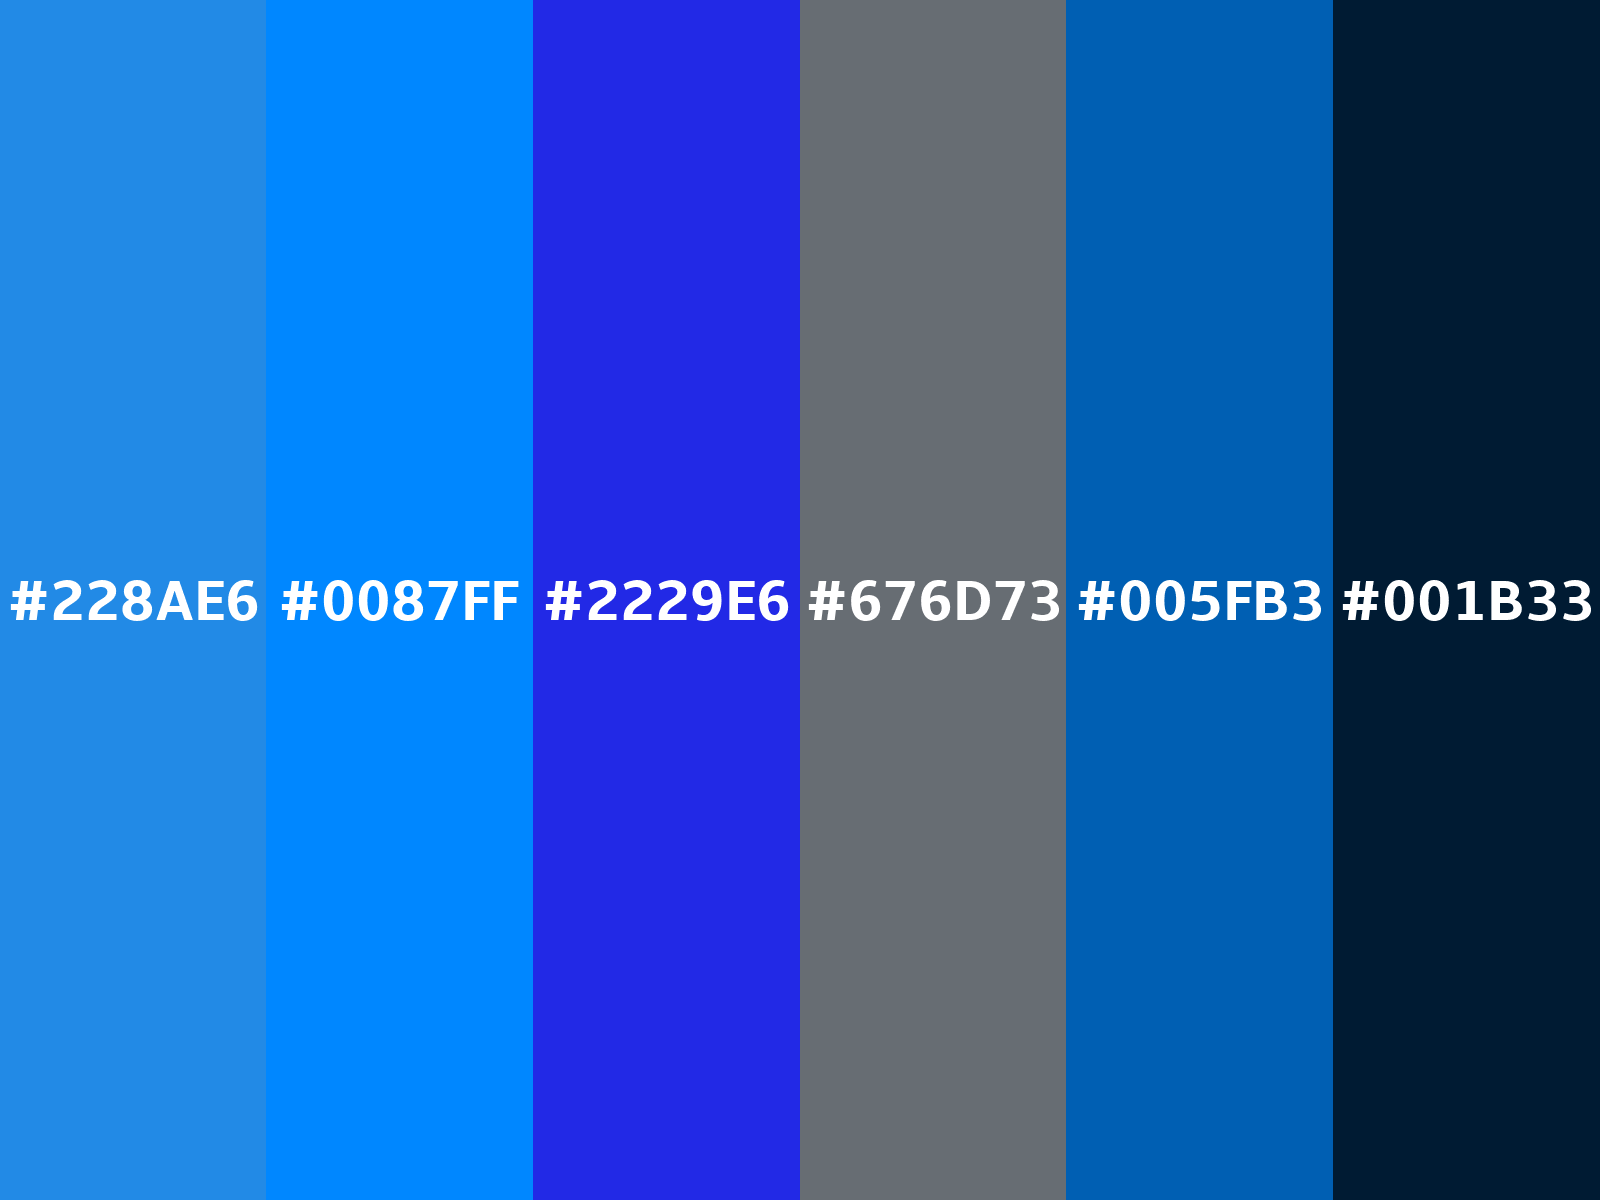 640E27 Hex Color, RGB: 100, 14, 39